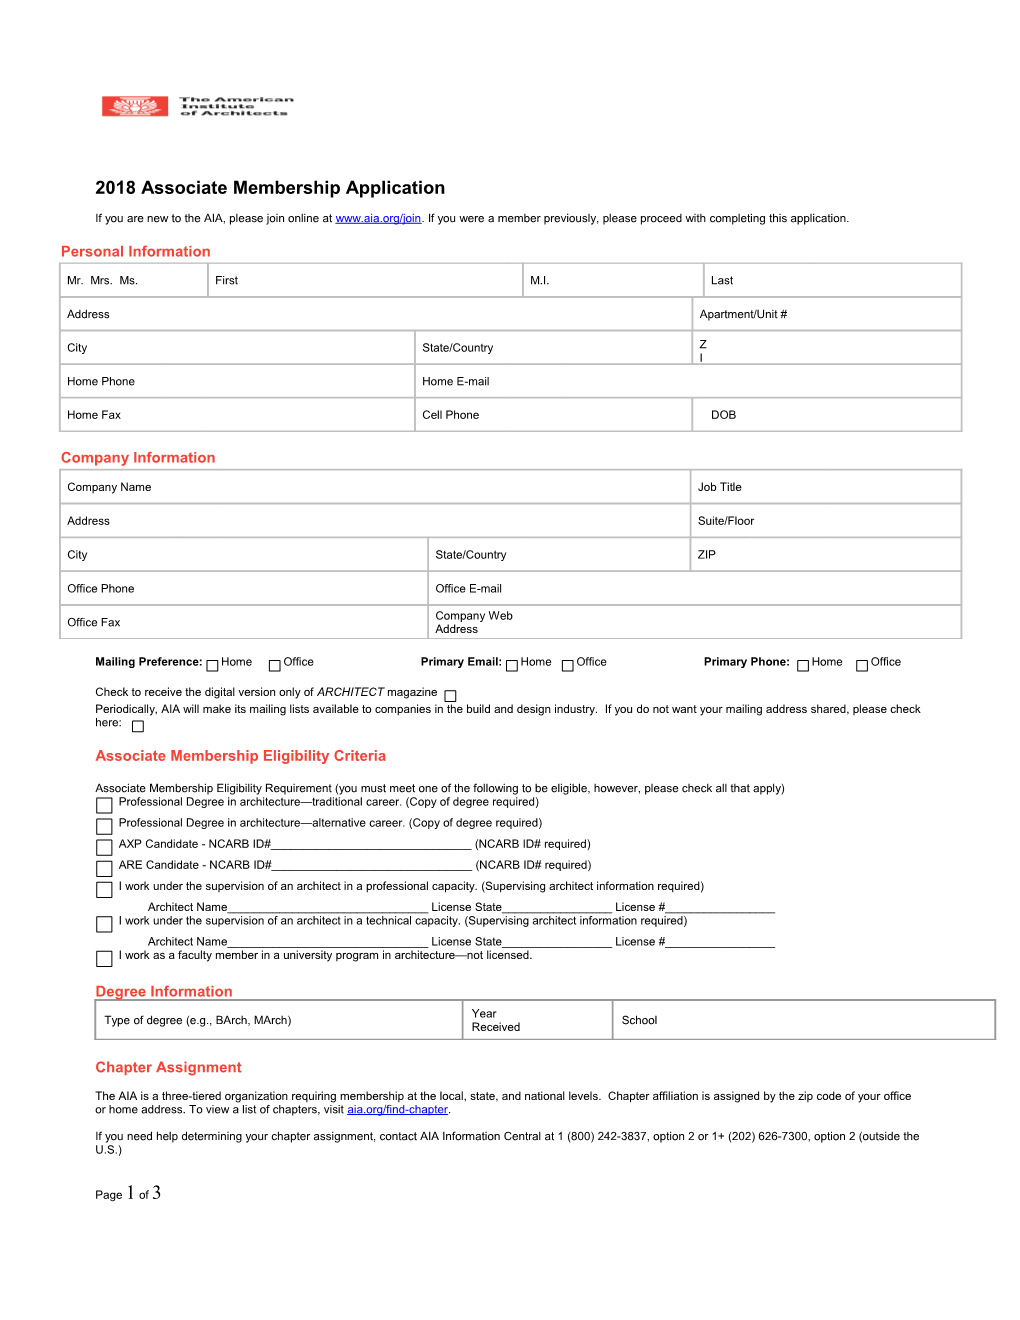 2018Associate Membership Application